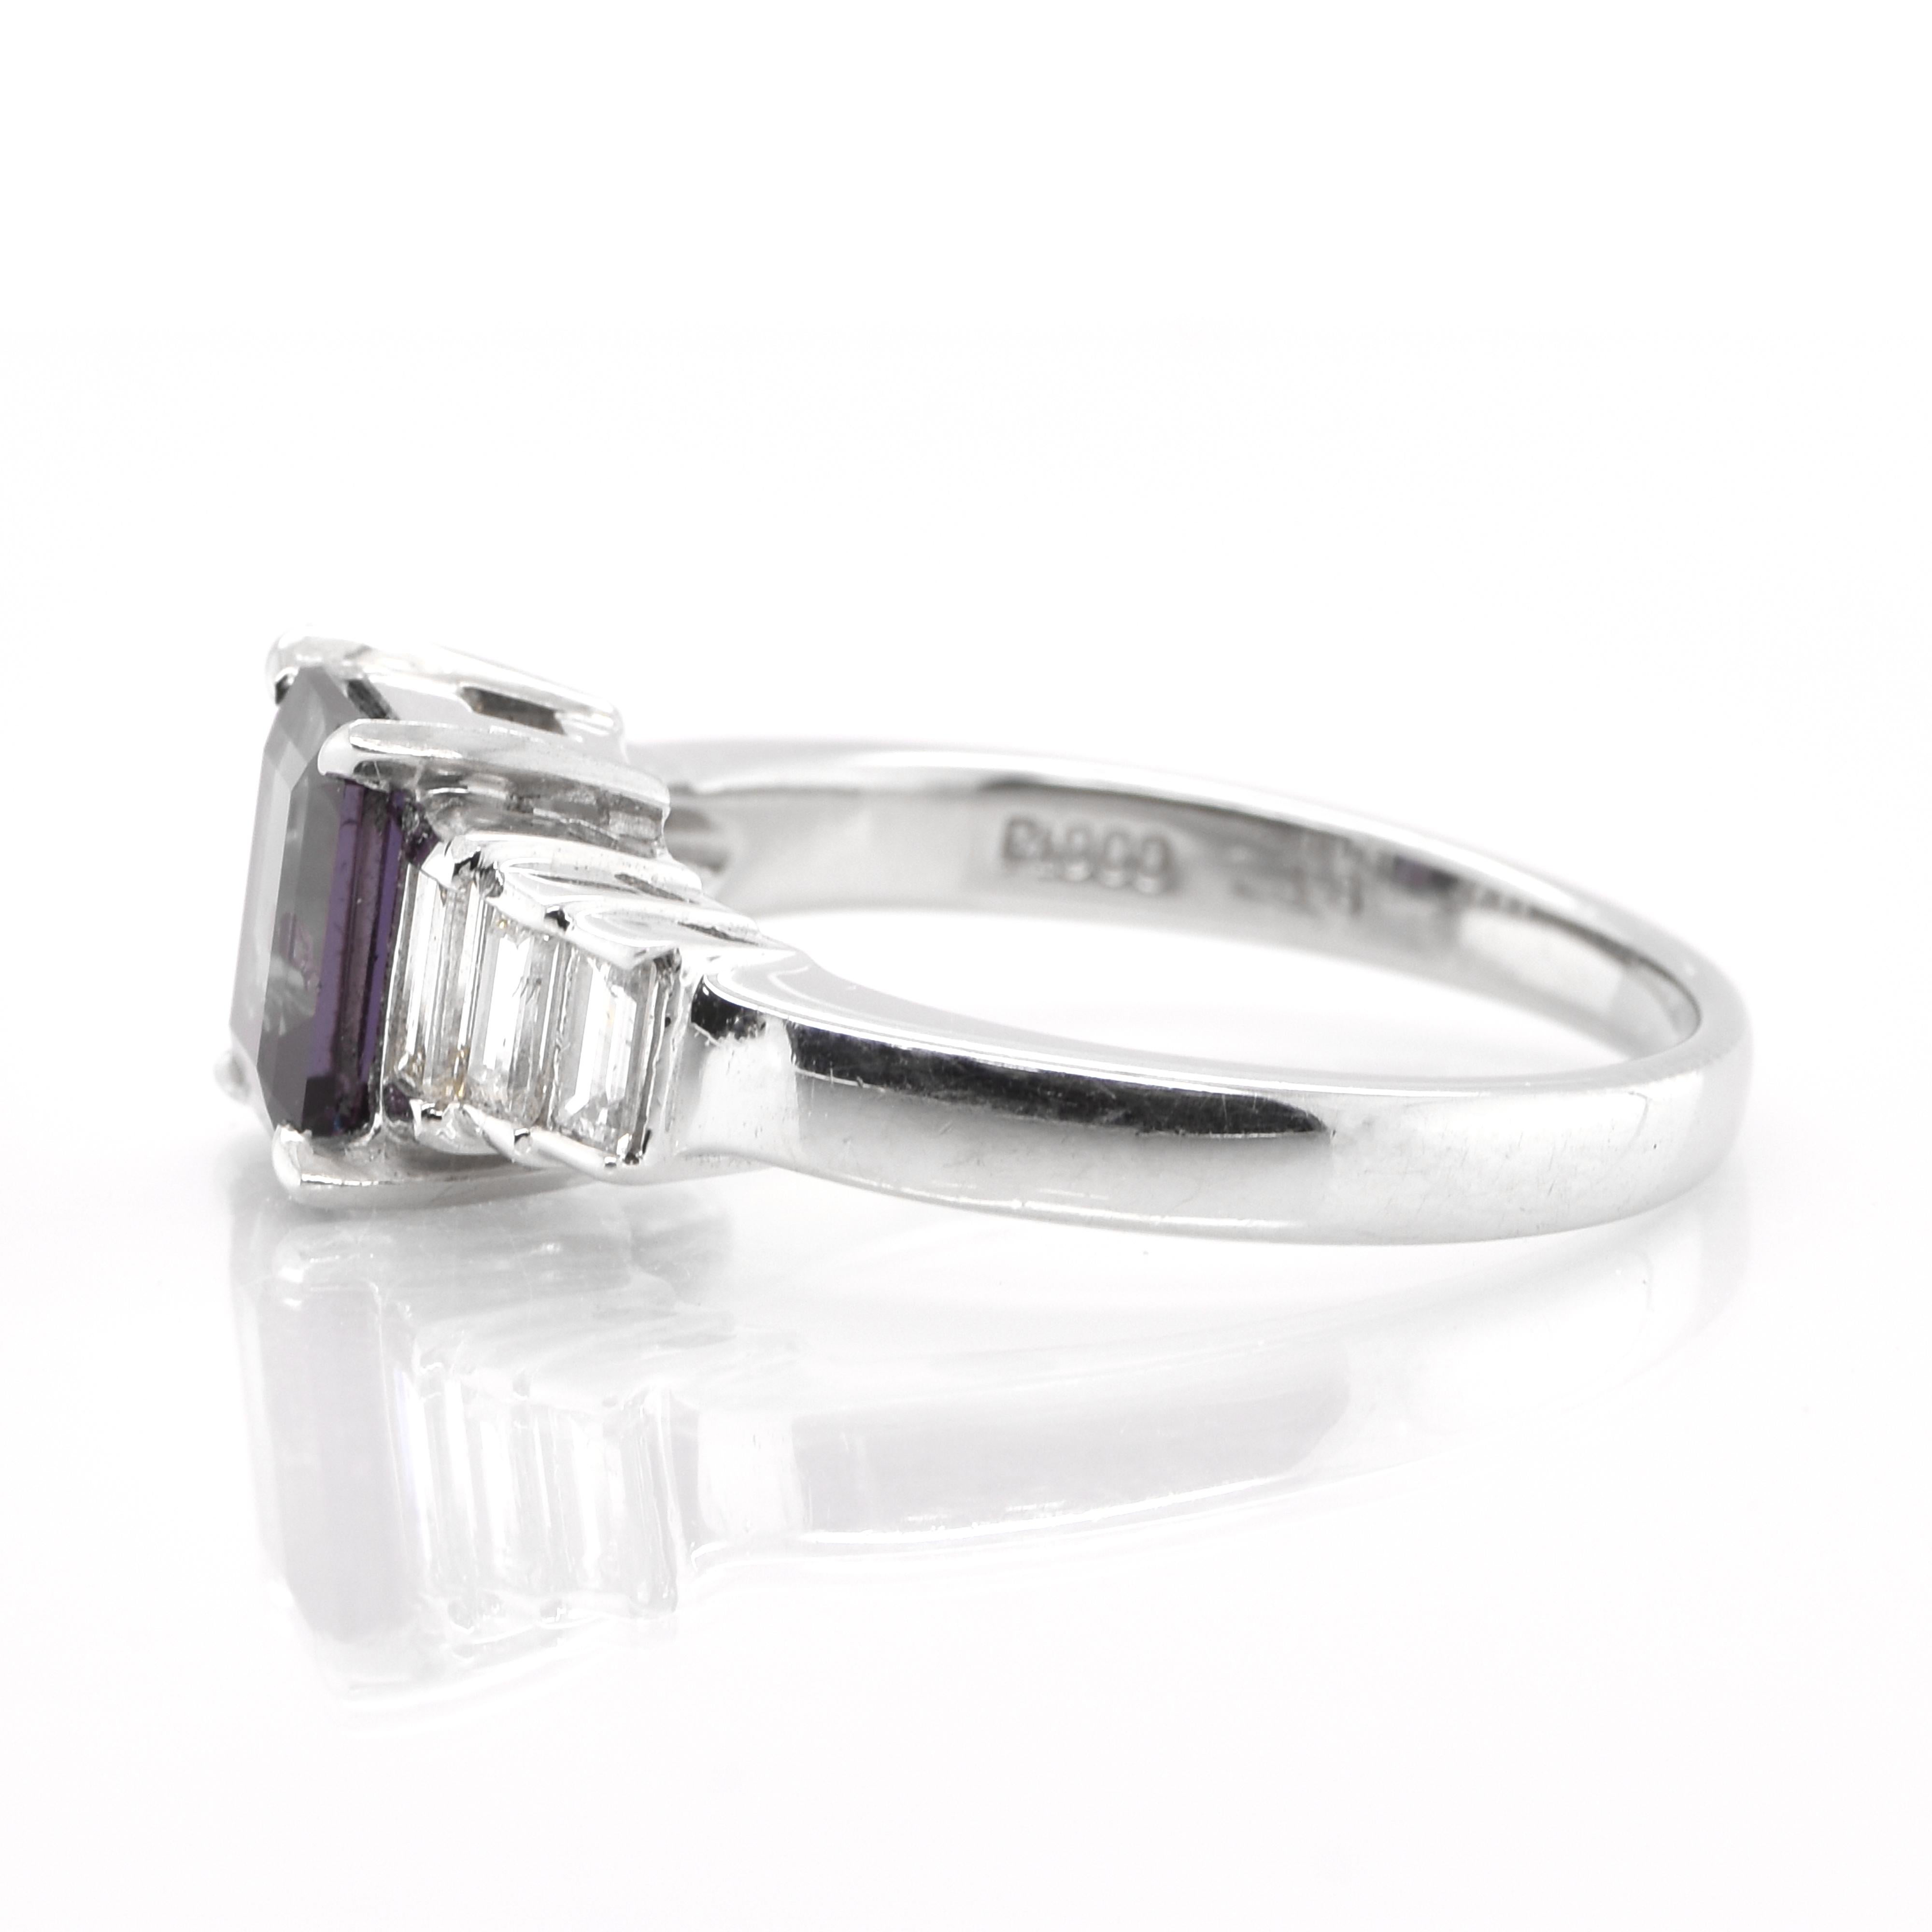 Emerald Cut 1.38 Carat Natural Color-Change Alexandrite and Diamond Ring Set in Platinum